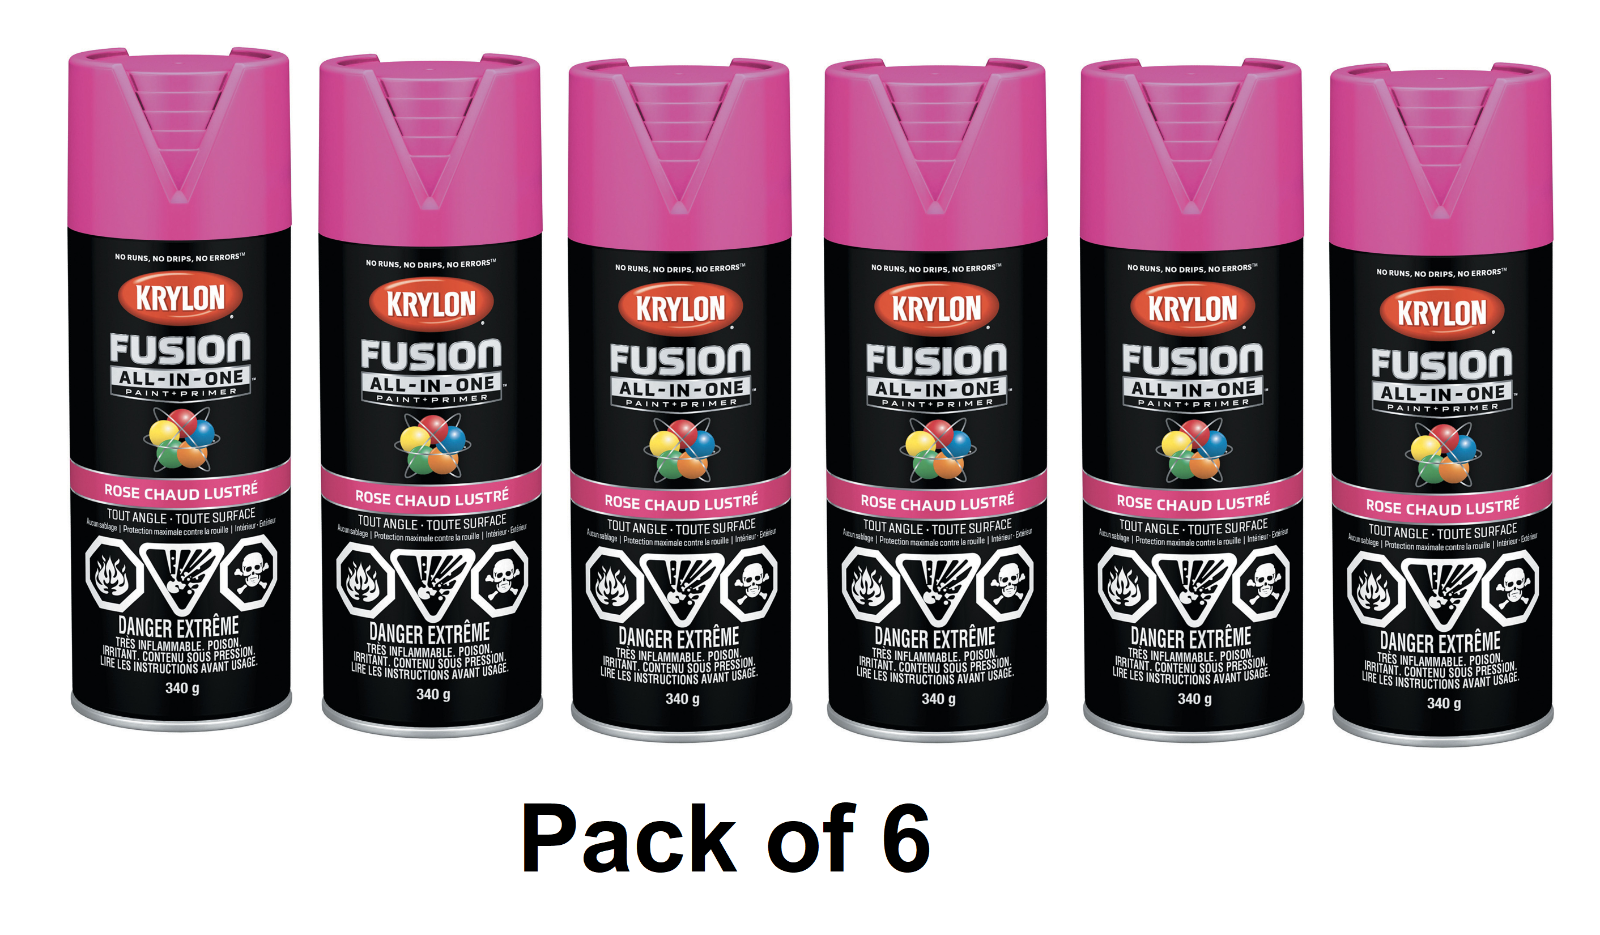 GENUINE KRYLON Fusion Gloss HOT PINK Spray Paint 12 OZ - 6 PACK